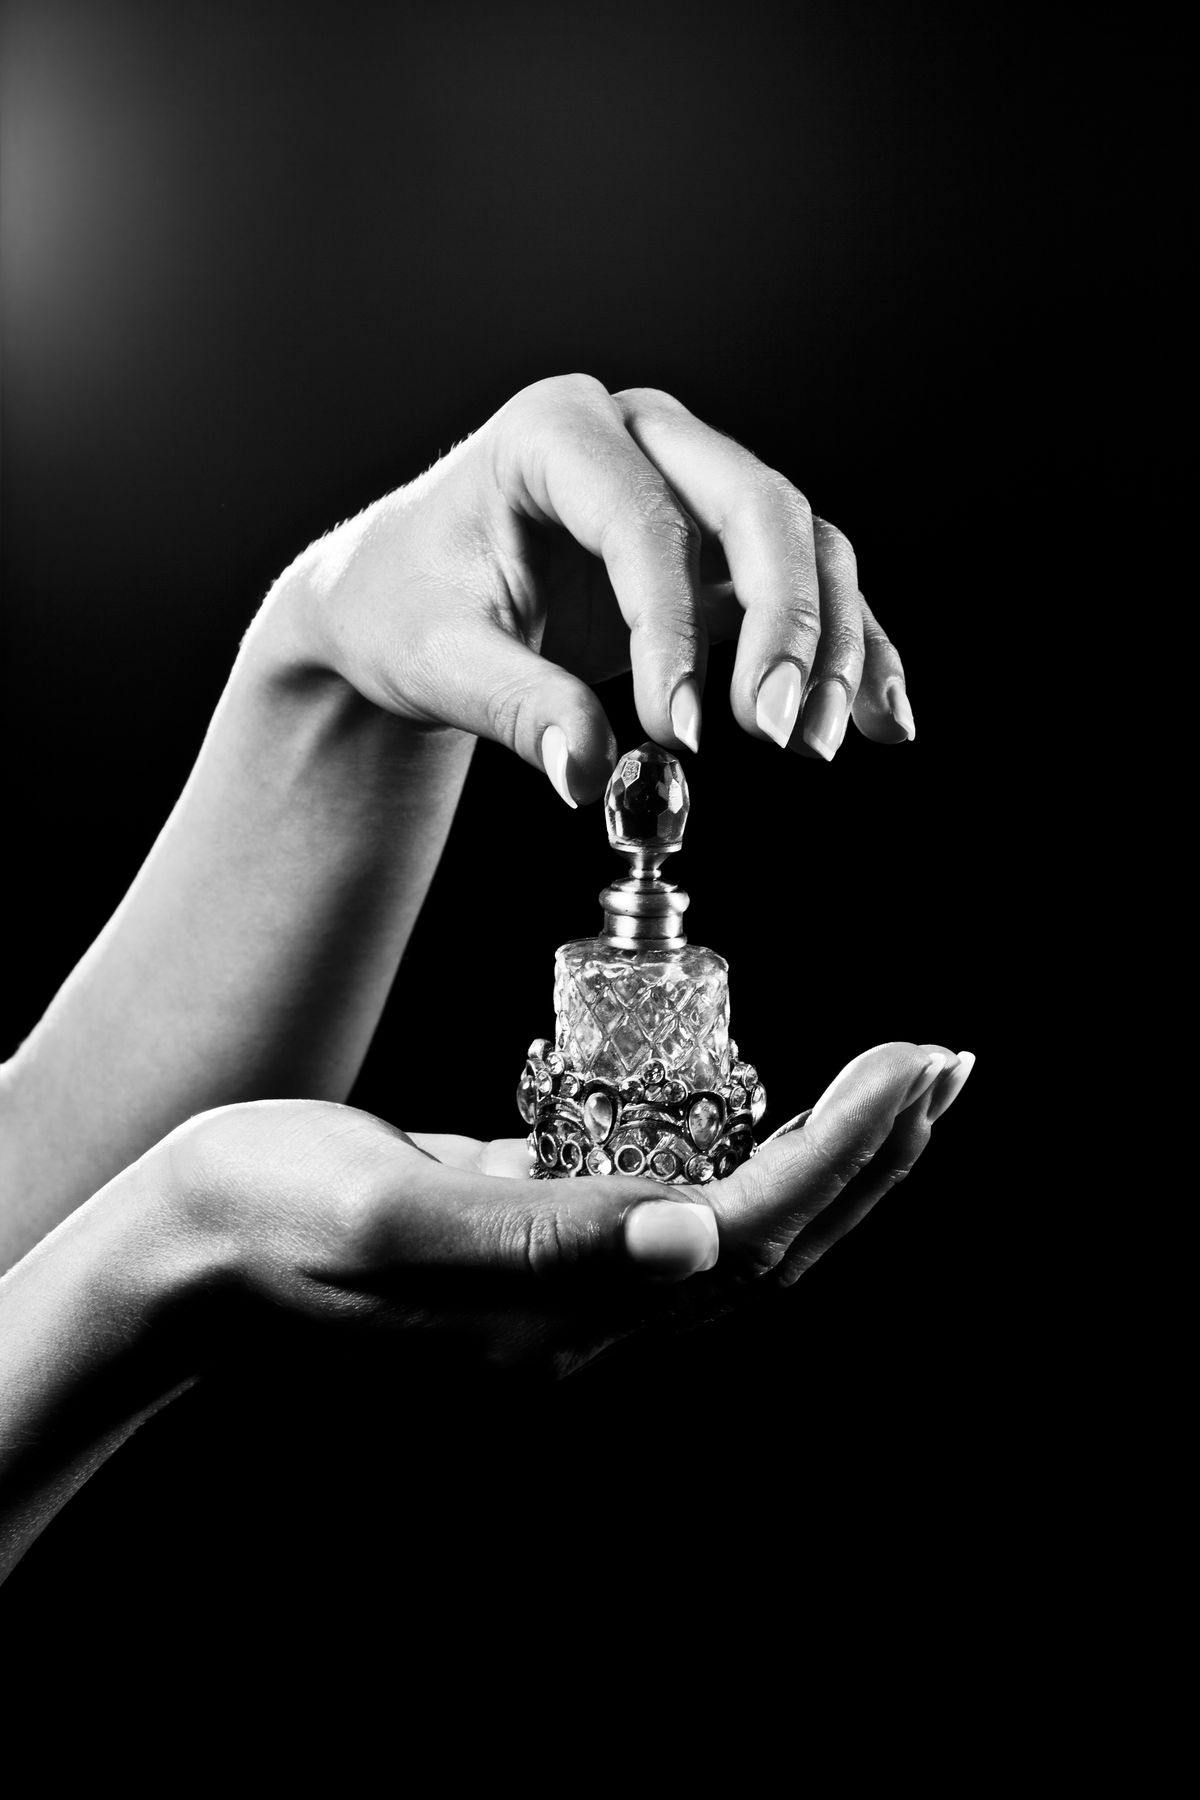 beautiful hands and luxury perfume bottle